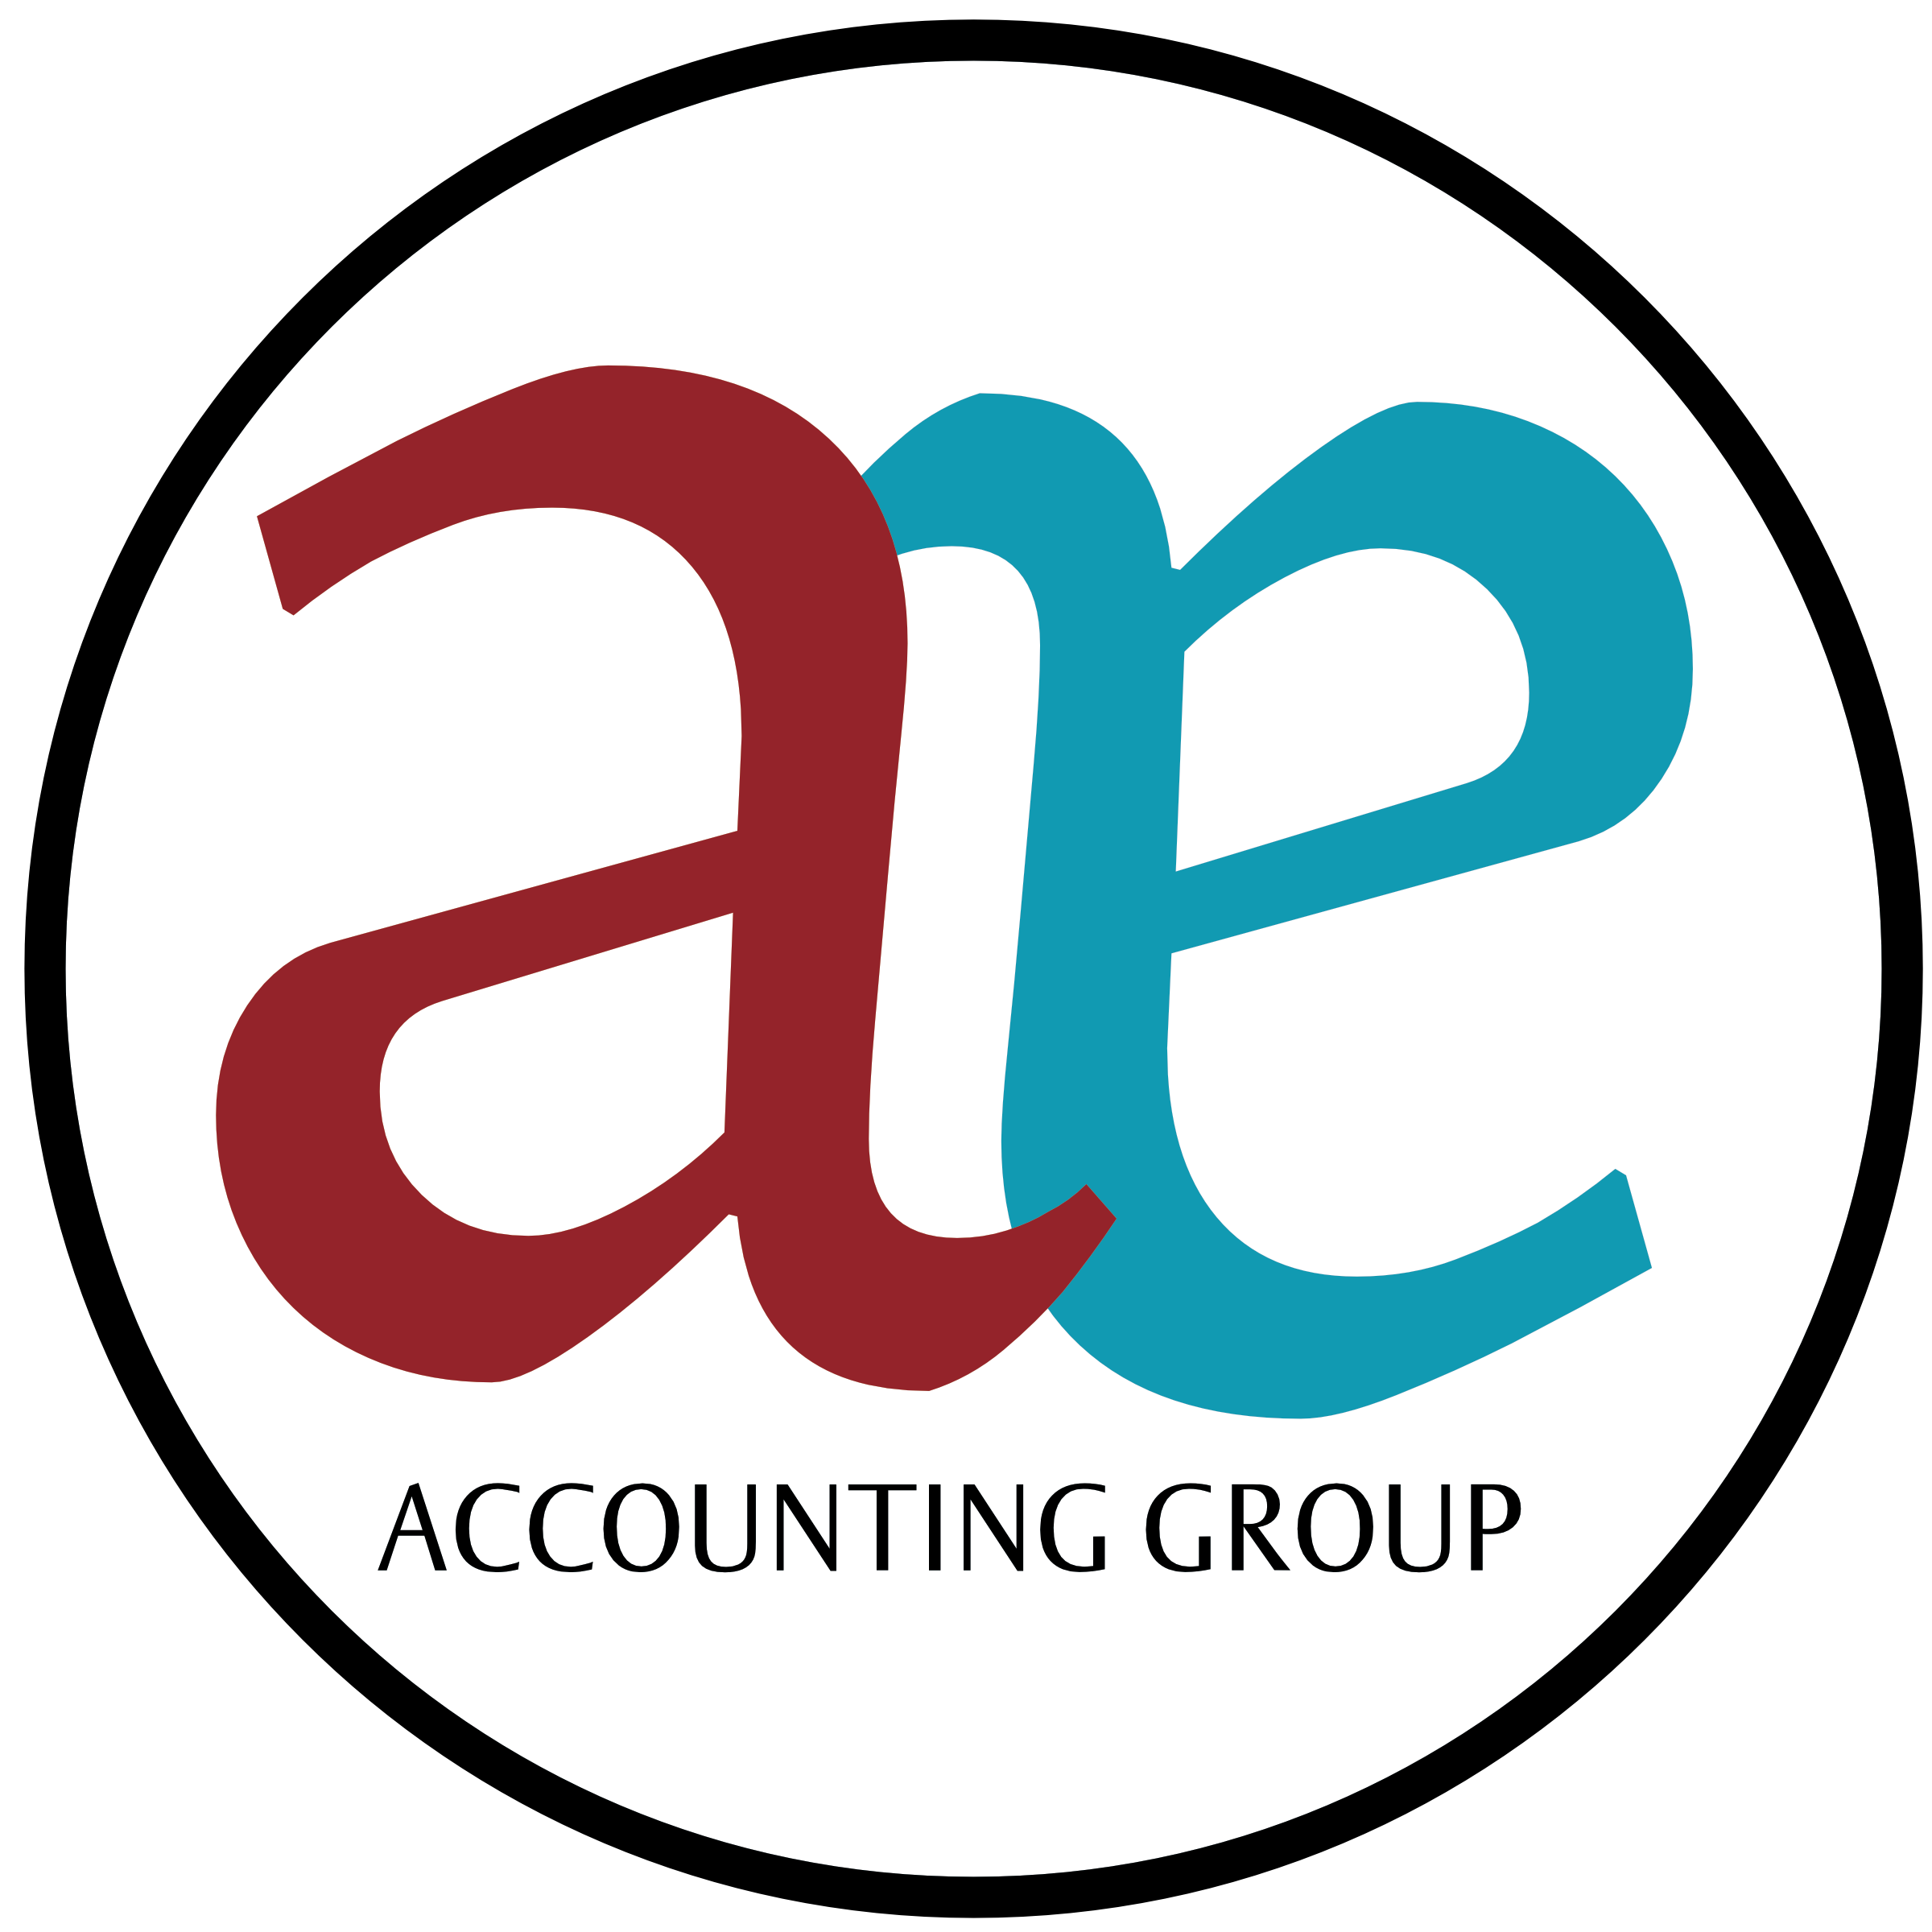 A&E ACCOUNTING GROUP, LLC